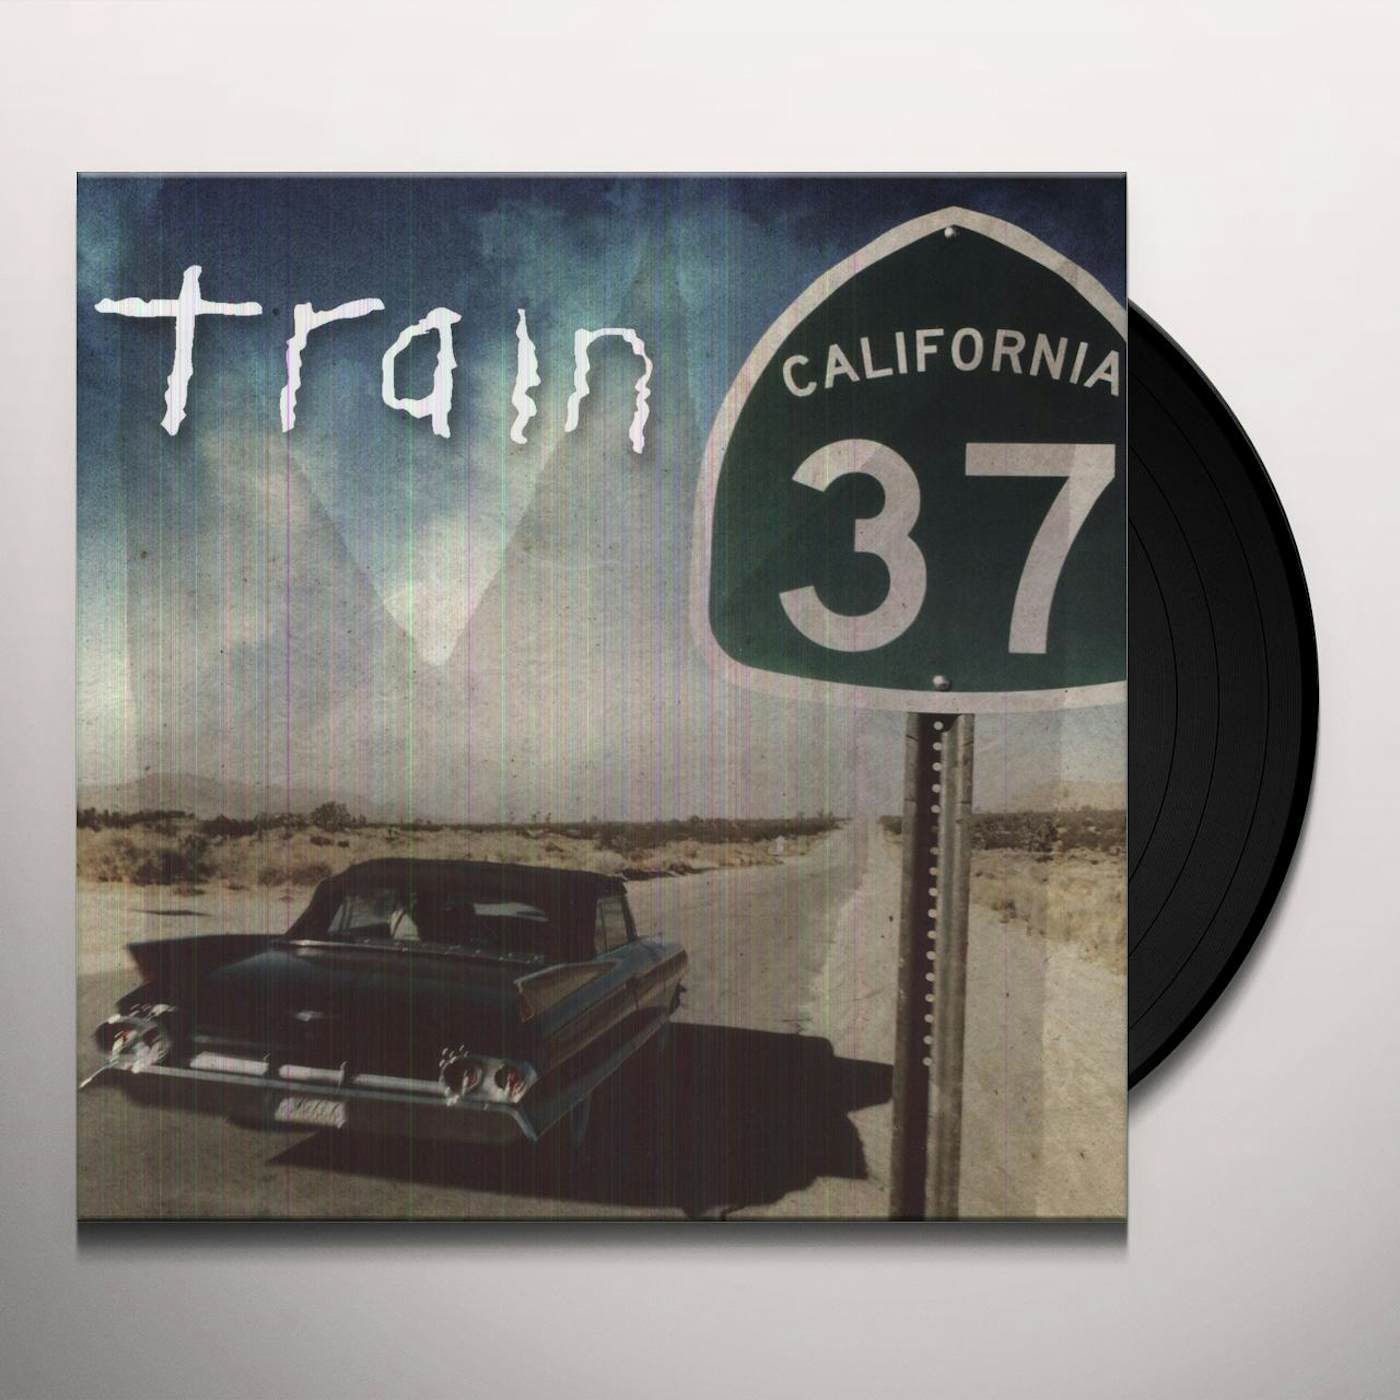 Train California 37 Vinyl Record